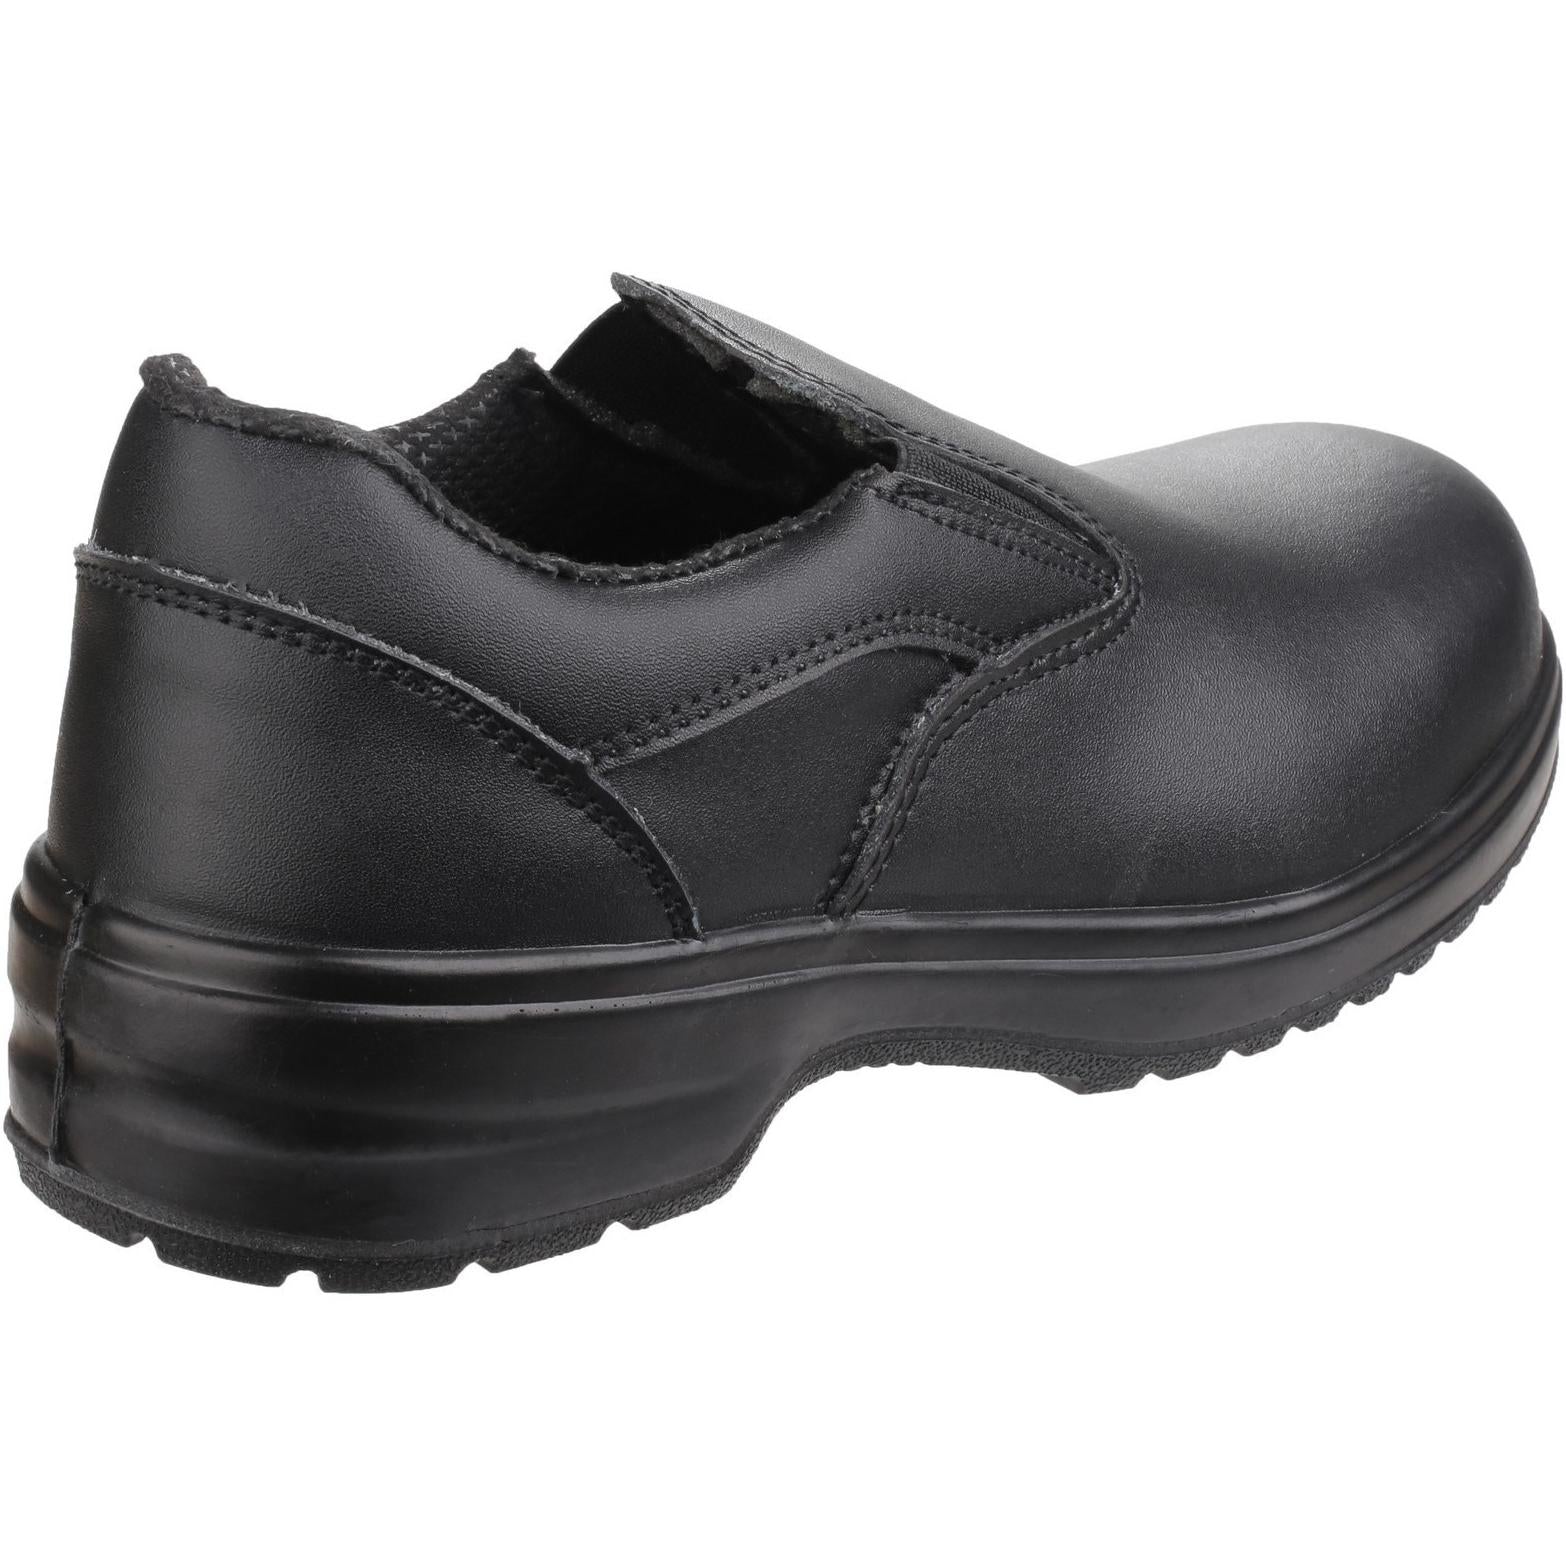 Amblers Safety FS94C Lightweight Slip on Safety Shoe